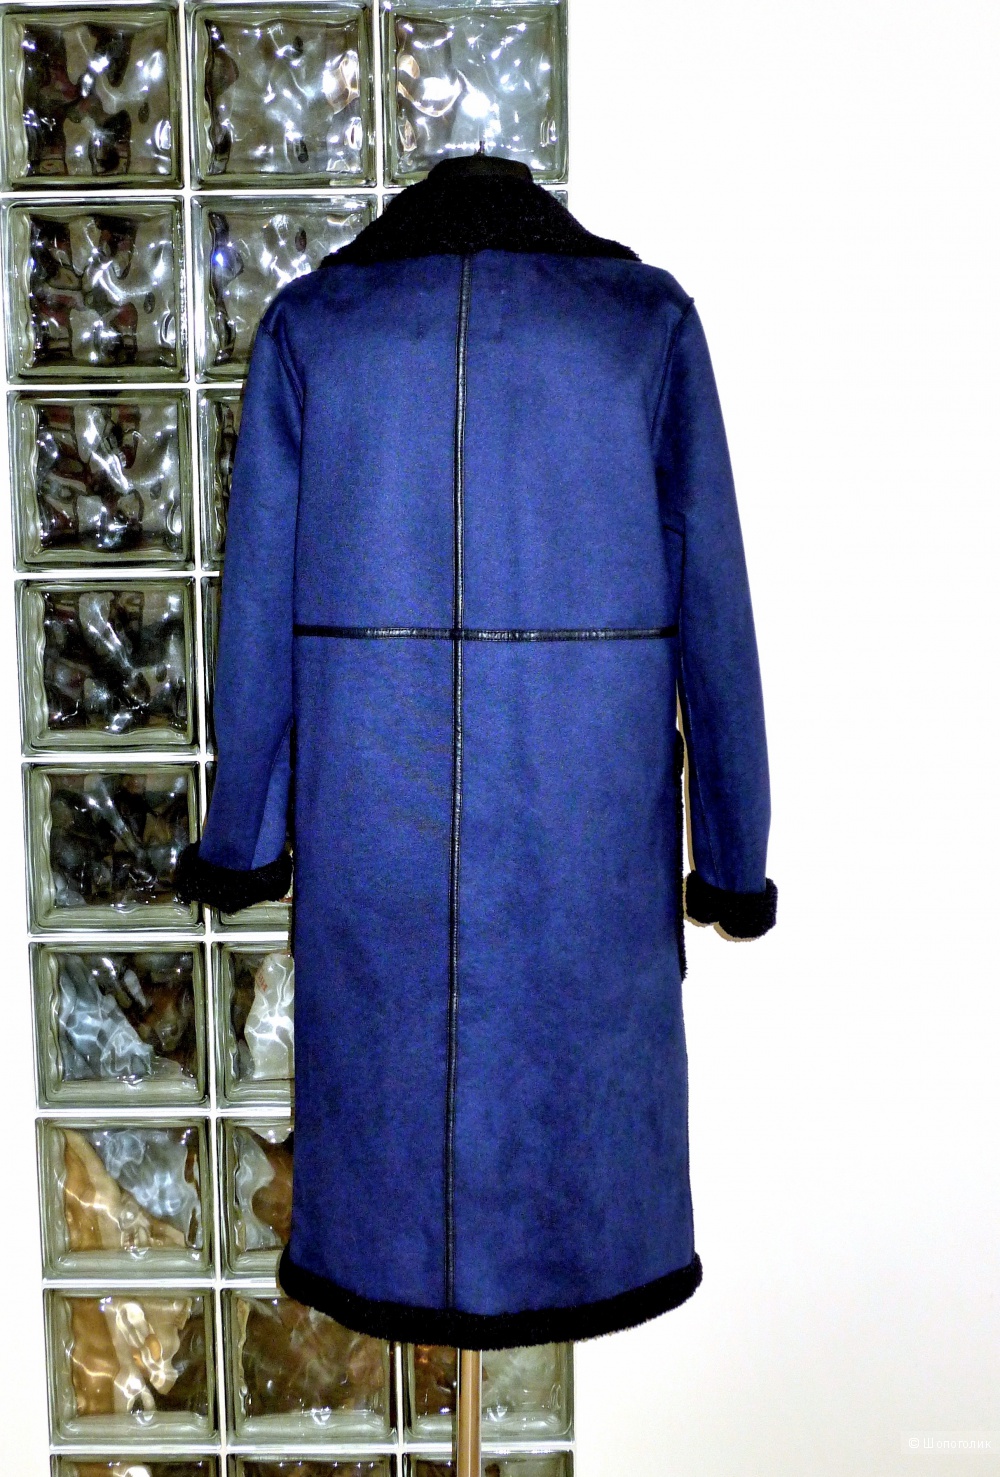 Пальто дубленка ZARA WOMAN размер S